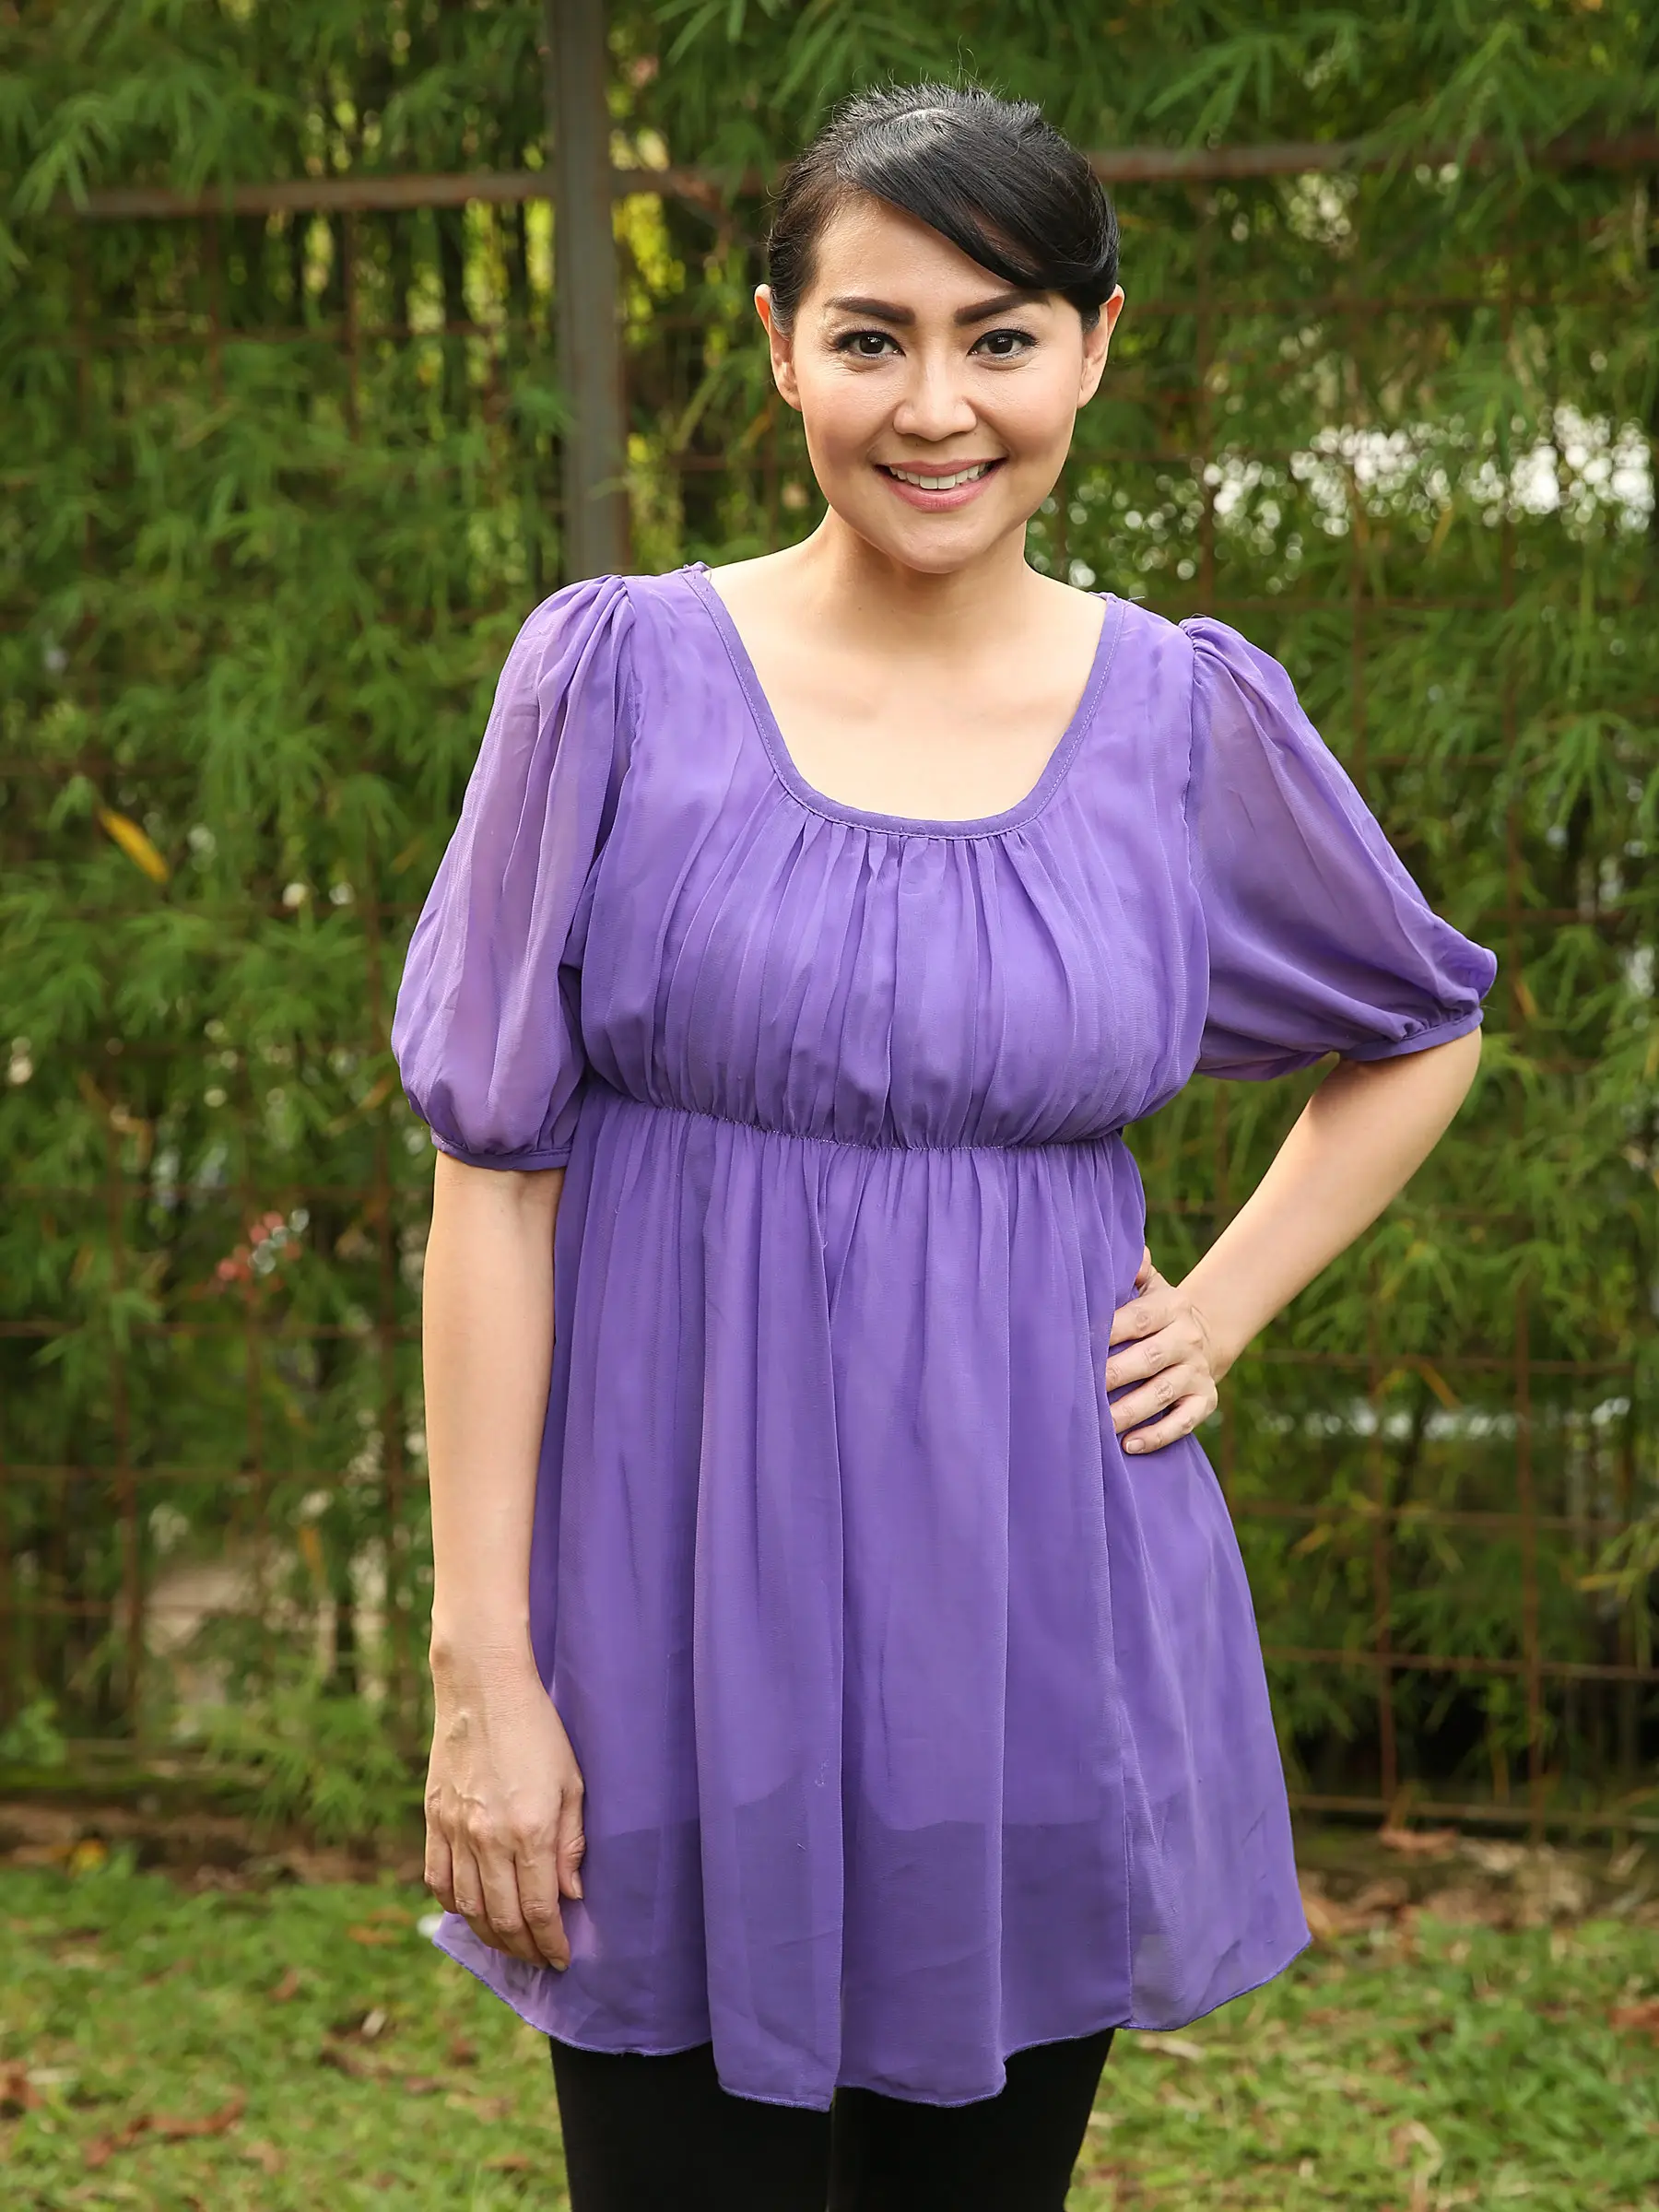 Tessa Kaunang saat syuting sinetron (Bambang E. Ros/Bintang.com)